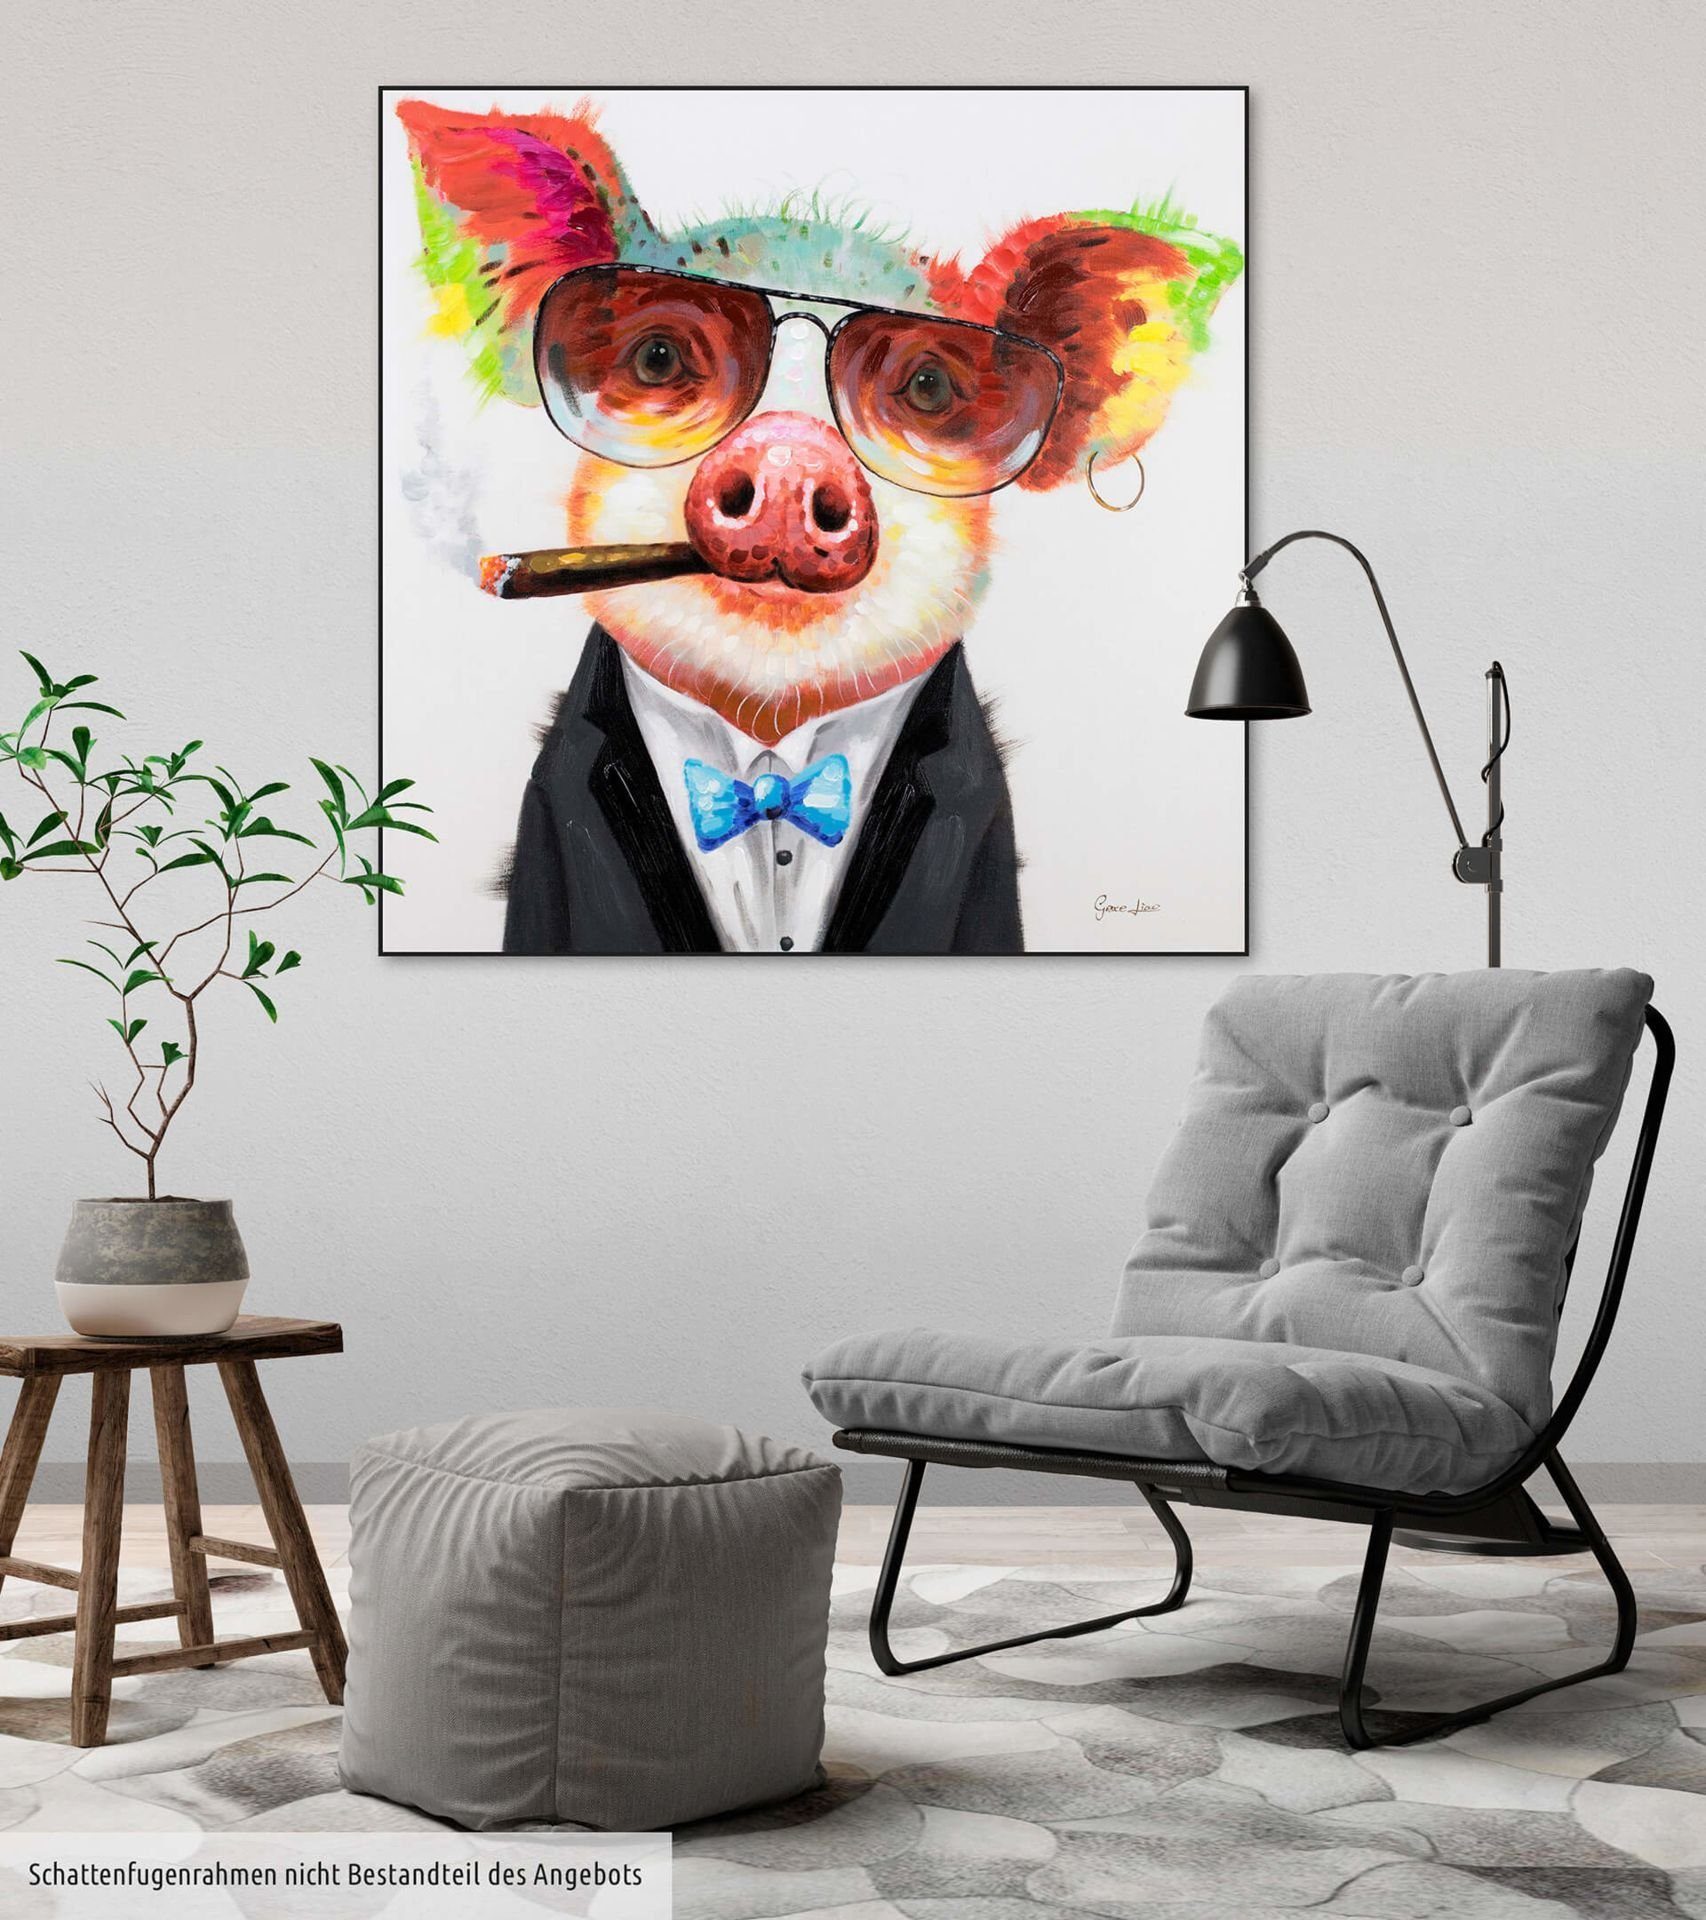 80x80 HANDGEMALT Leinwandbild Gemälde KUNSTLOFT Wandbild cm, 100% Bacon Wohnzimmer Smoking Hot